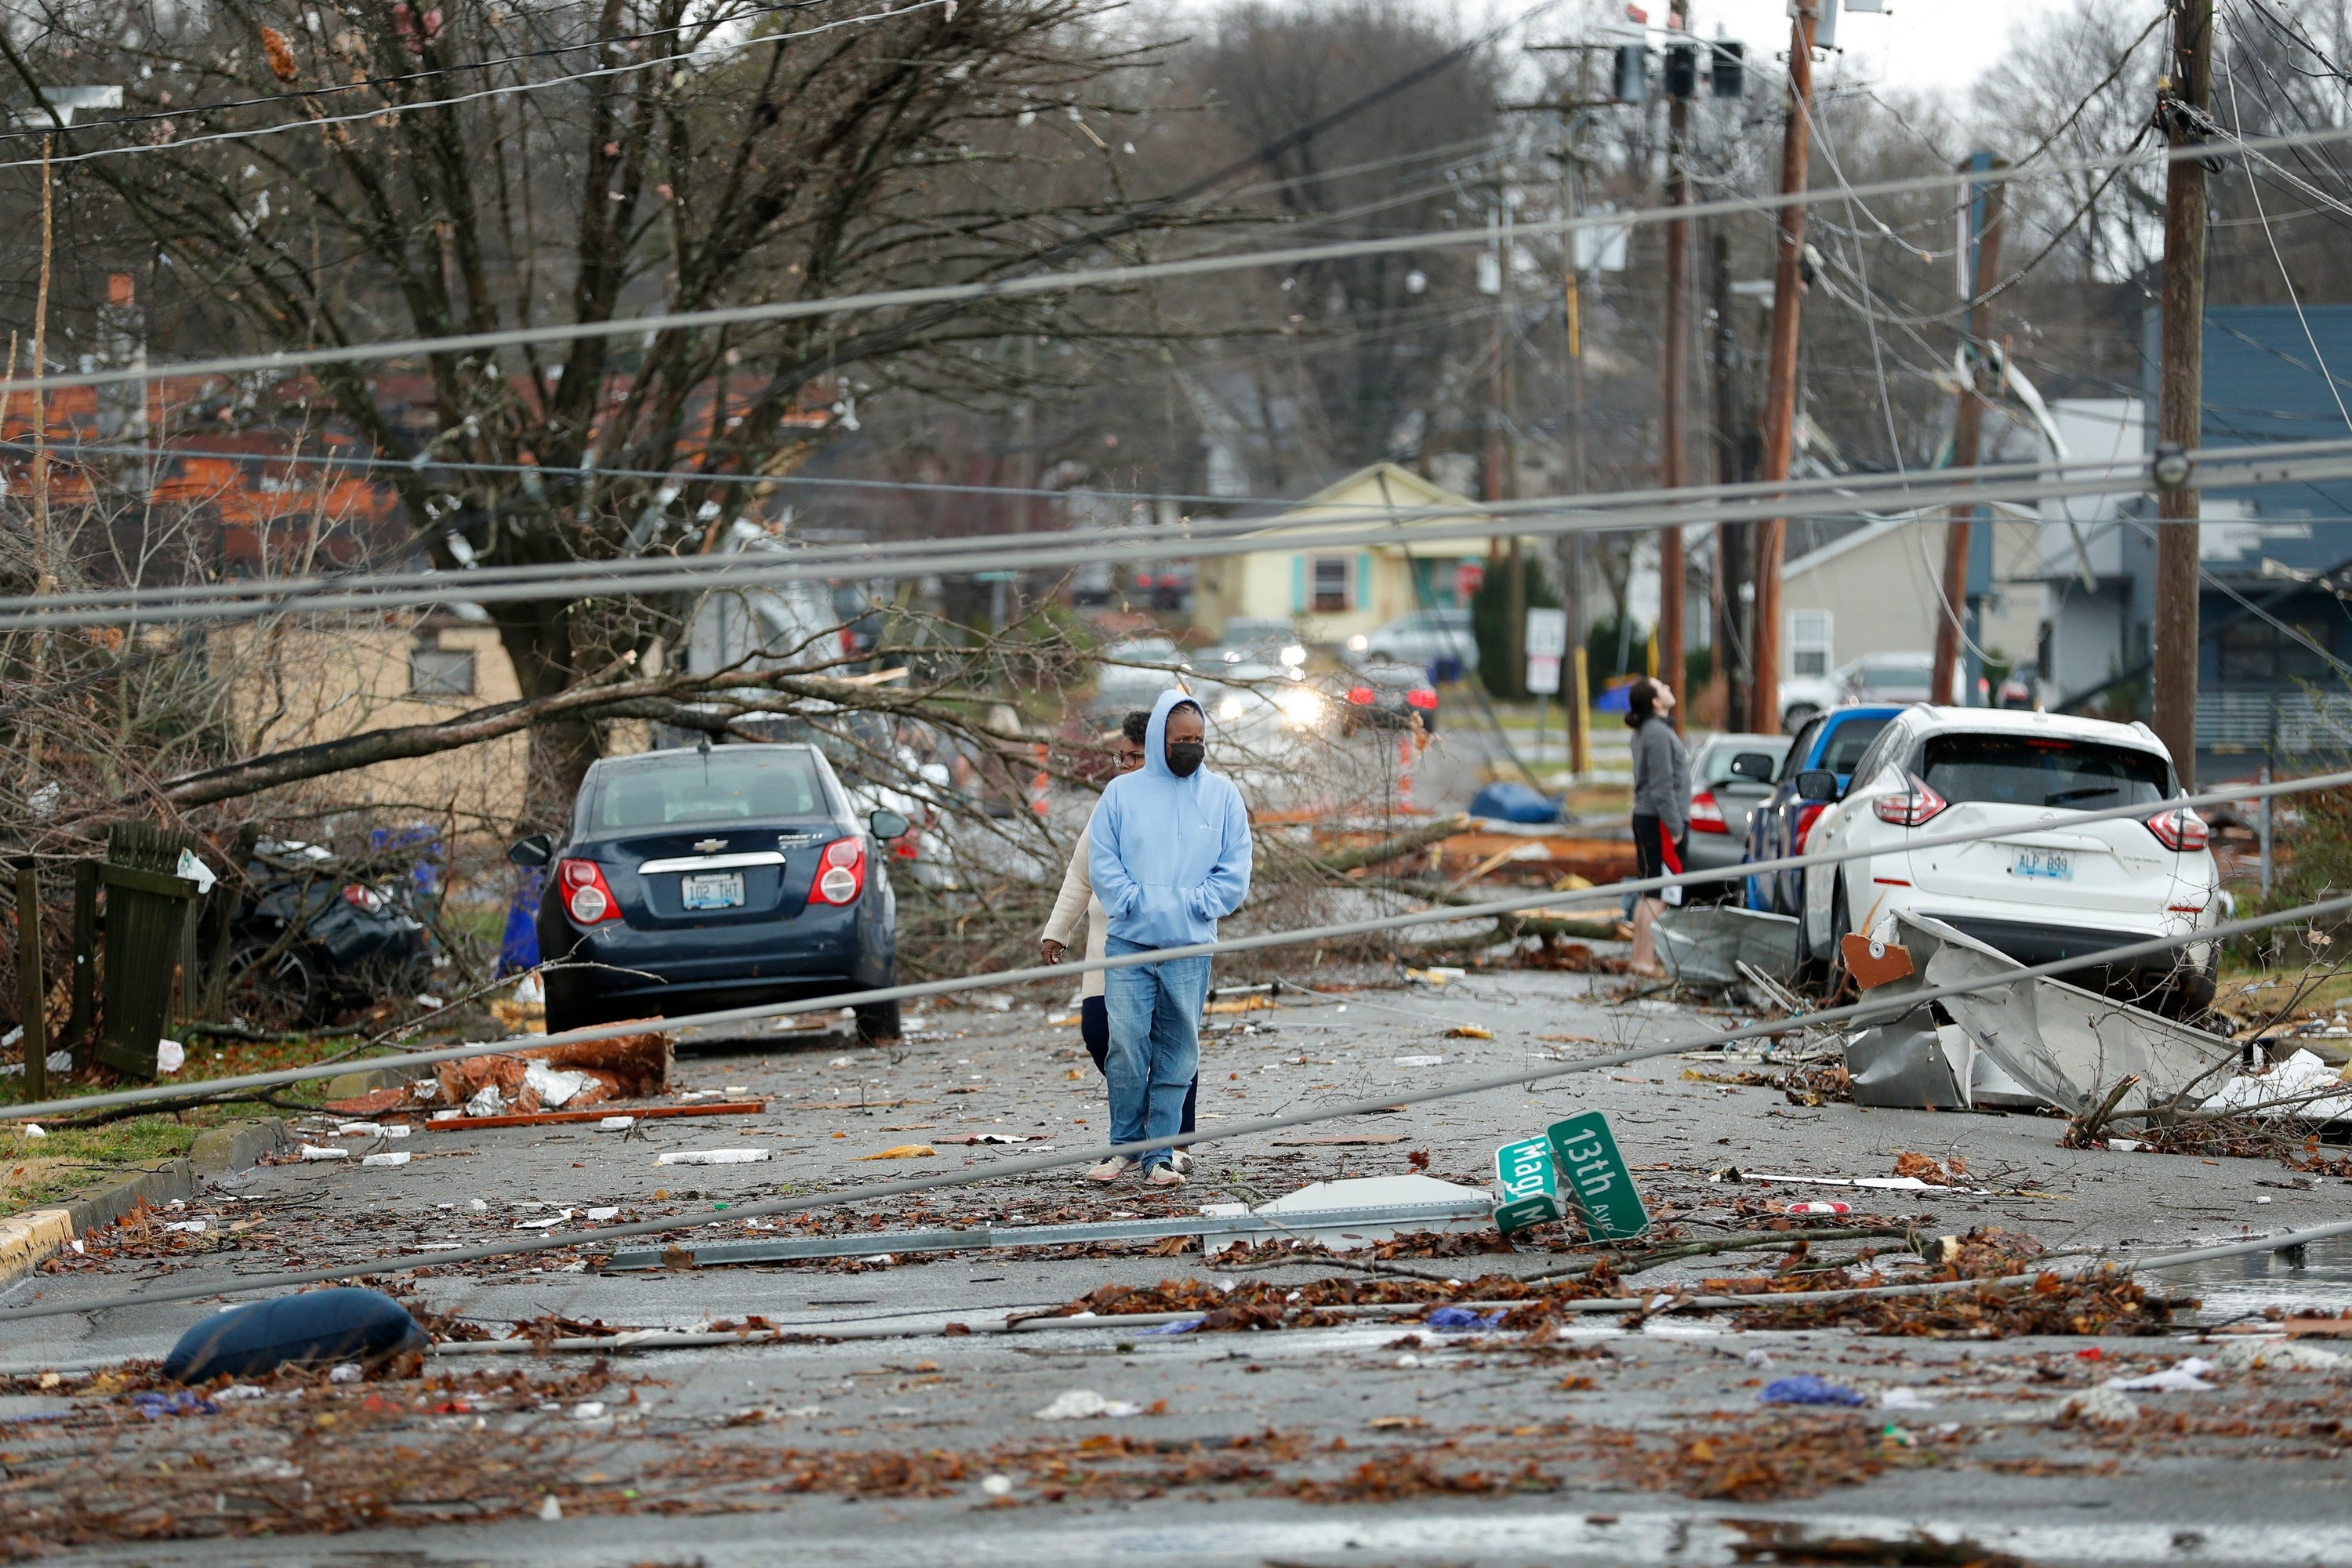 People walk between cars and debris, including fallen street signs